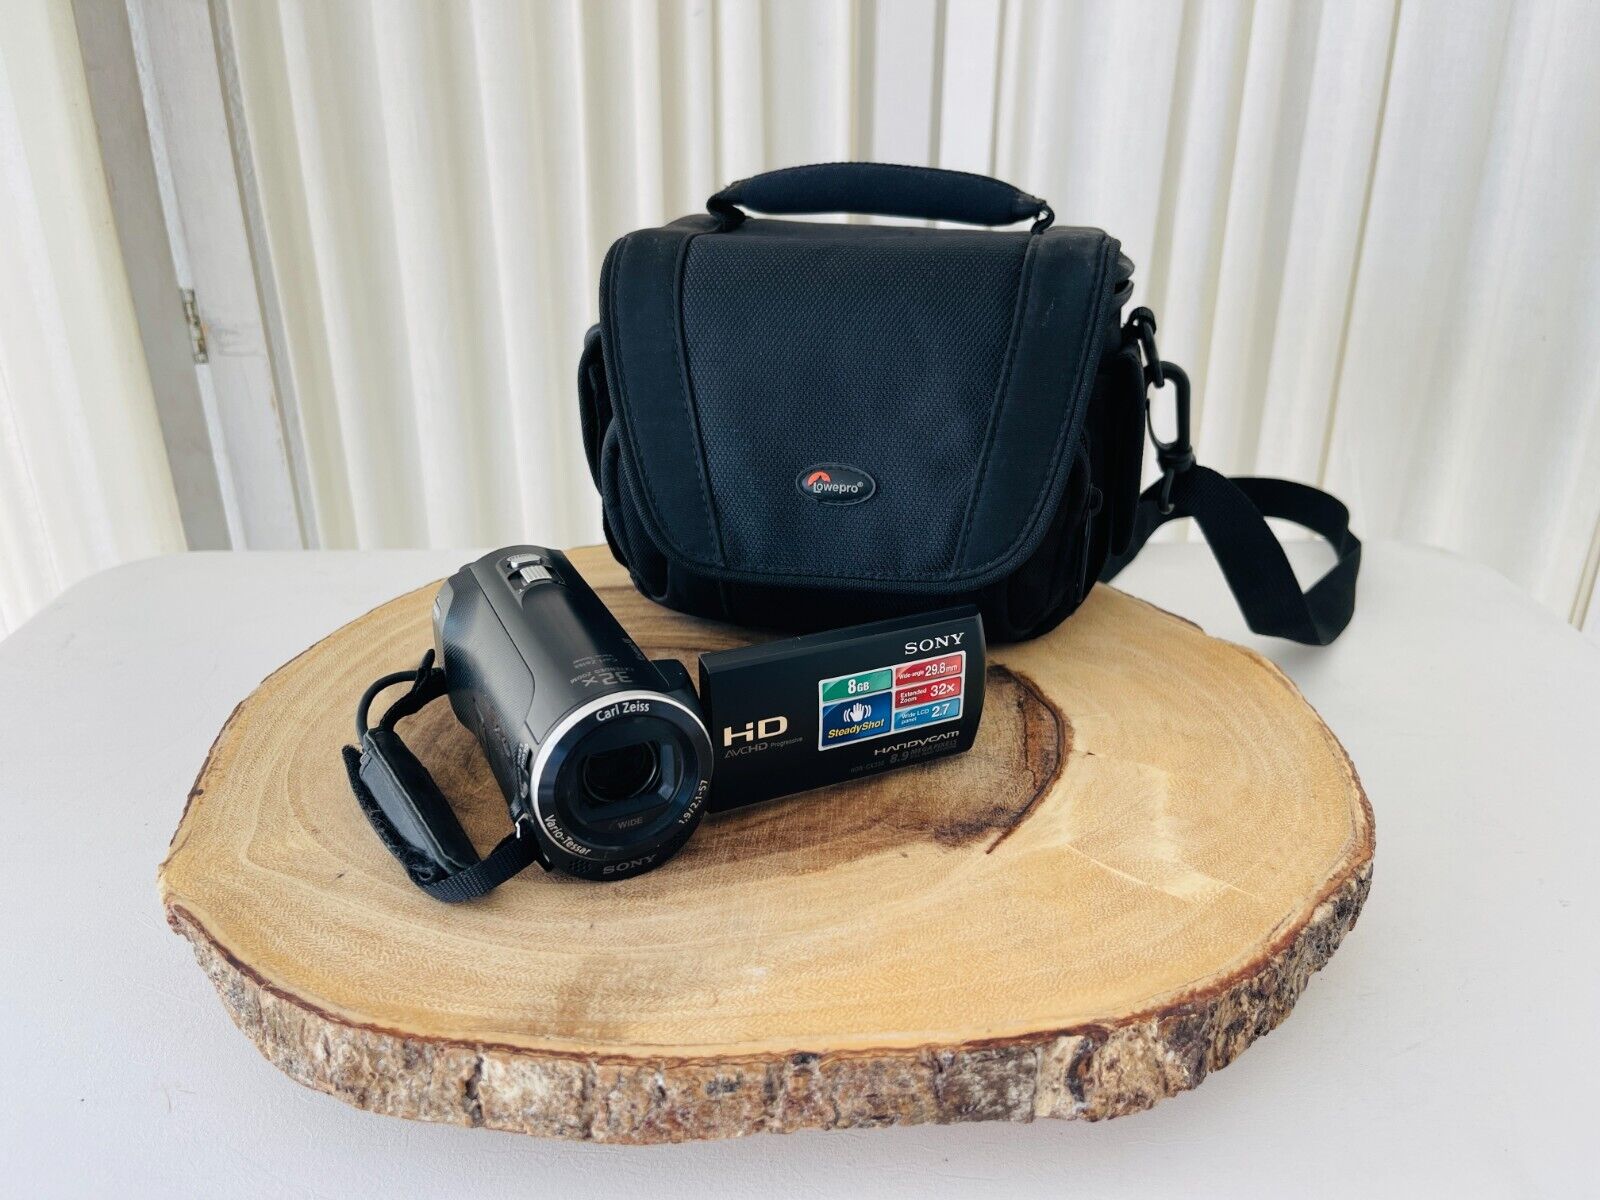 Sony HDR-CX240 Camcorder Black for sale online eBay